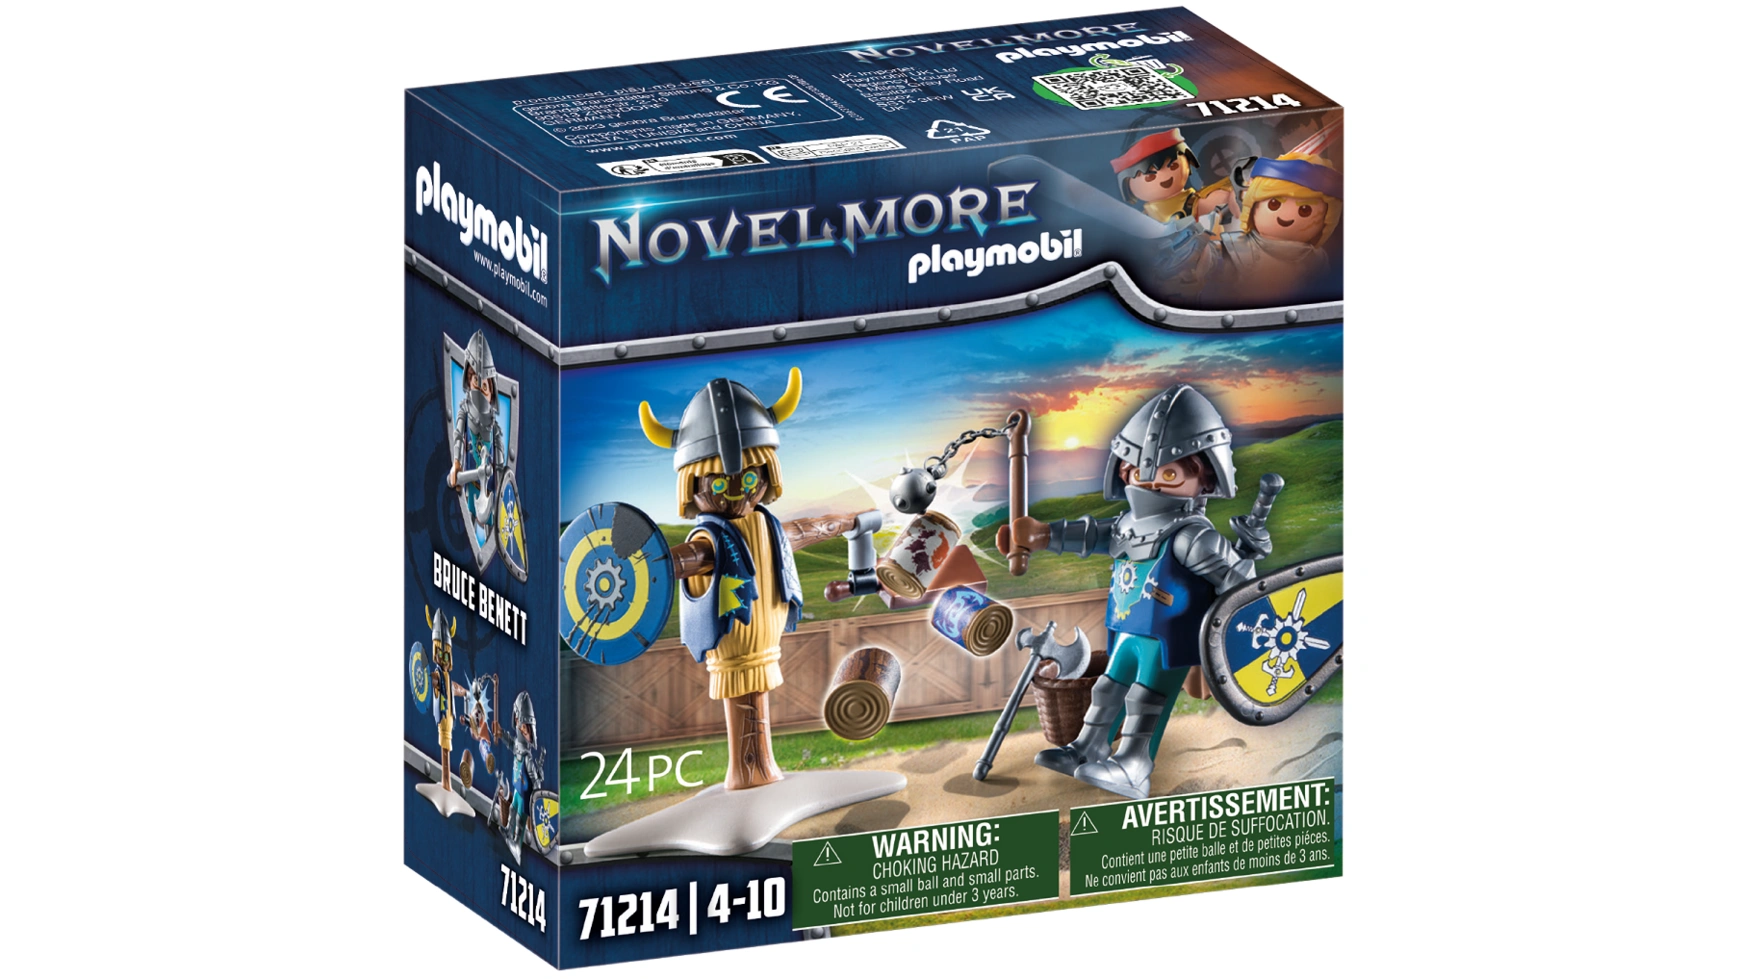 Novelmore боевая подготовка Playmobil